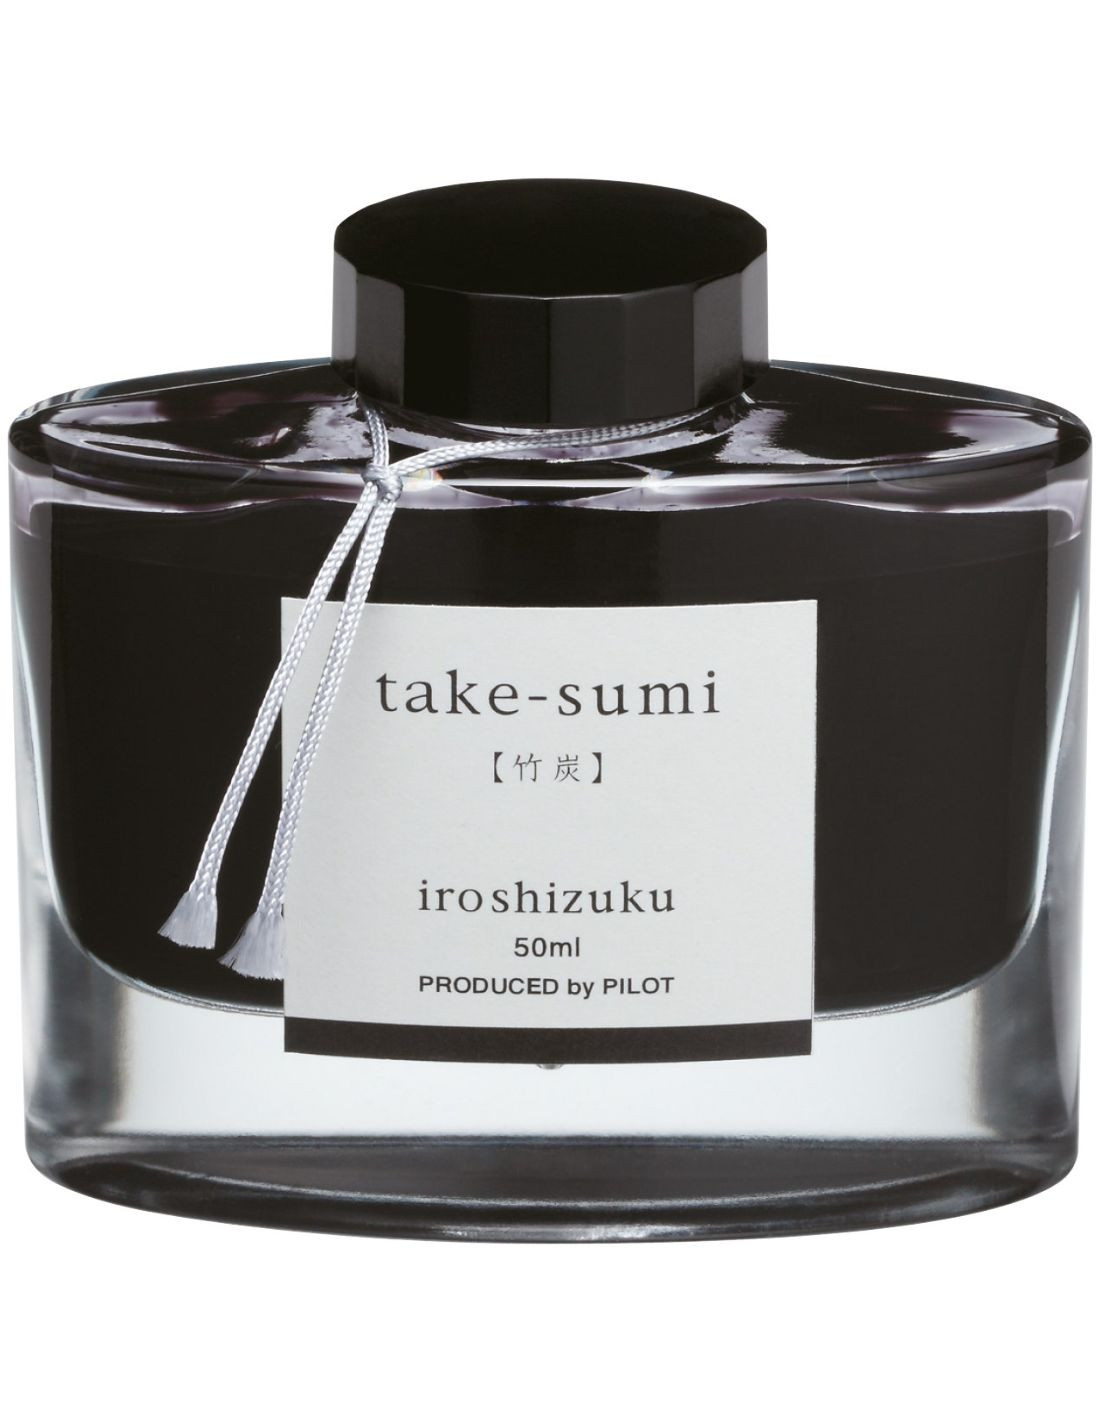 Iroshizuku Ink - Bottle 50ml - Take-sumi - Pilot